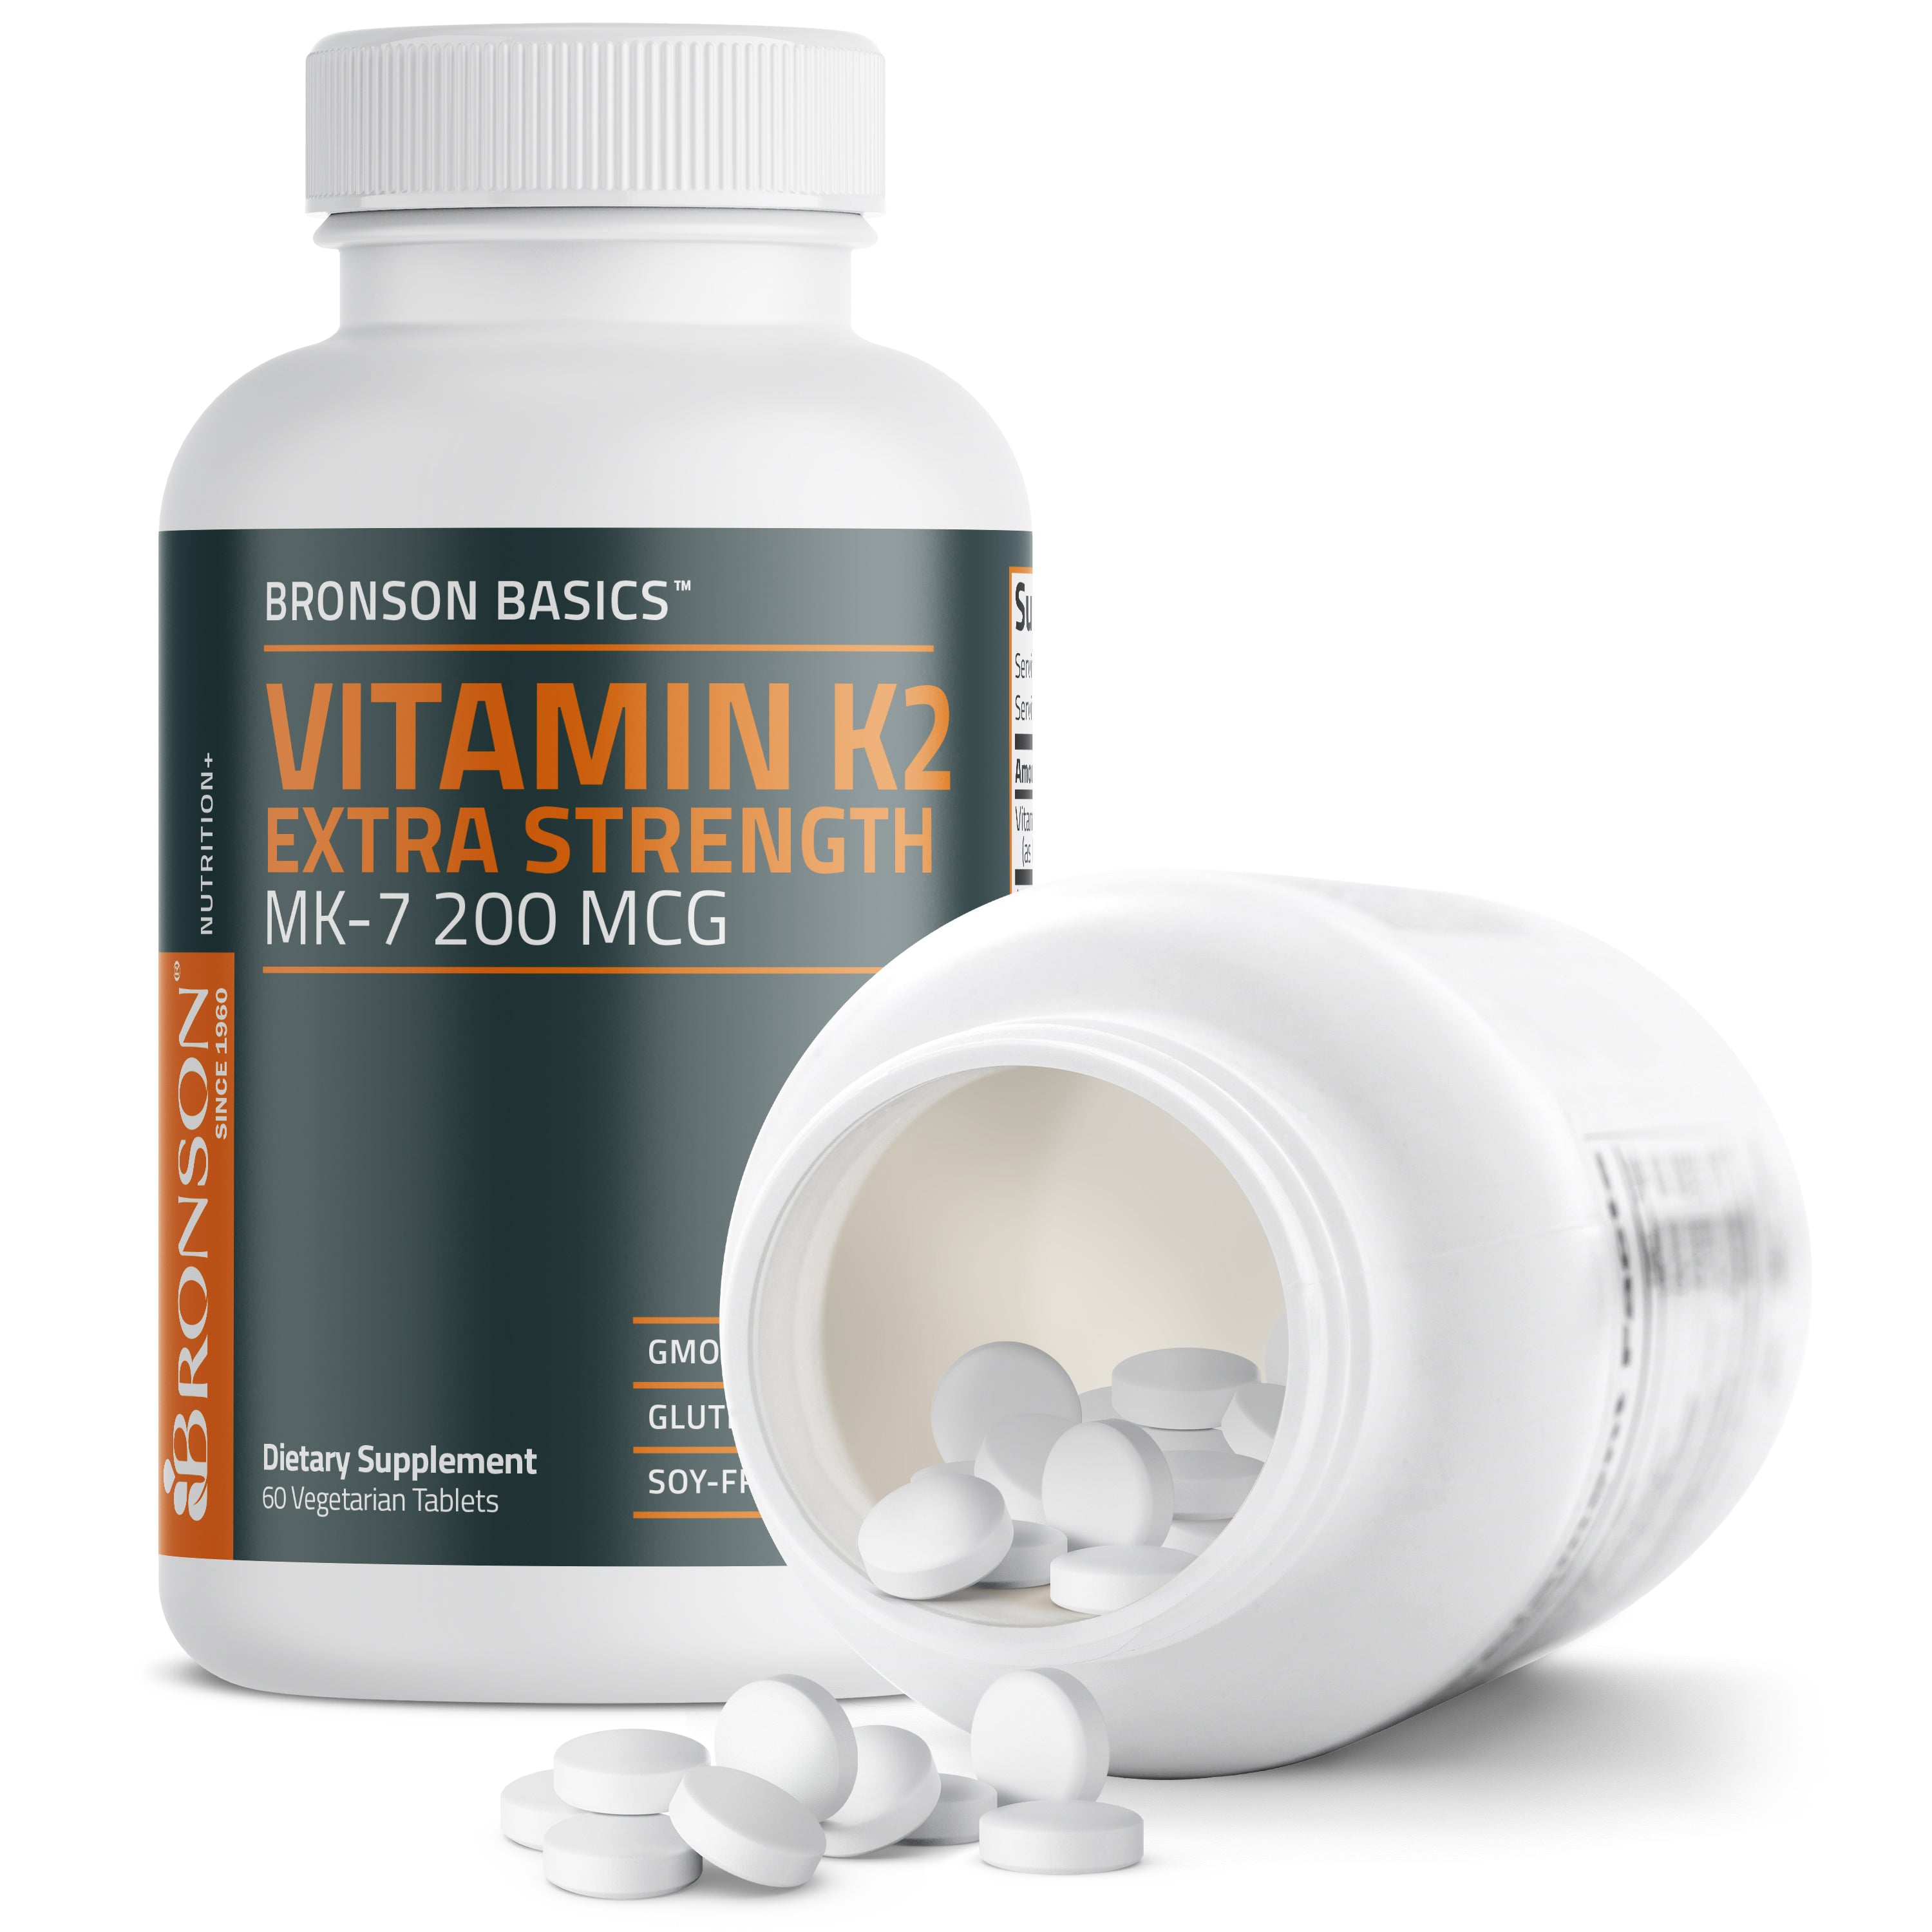 Vitamin K2 Extra Strength MK-7 200 MCG view 4 of 6